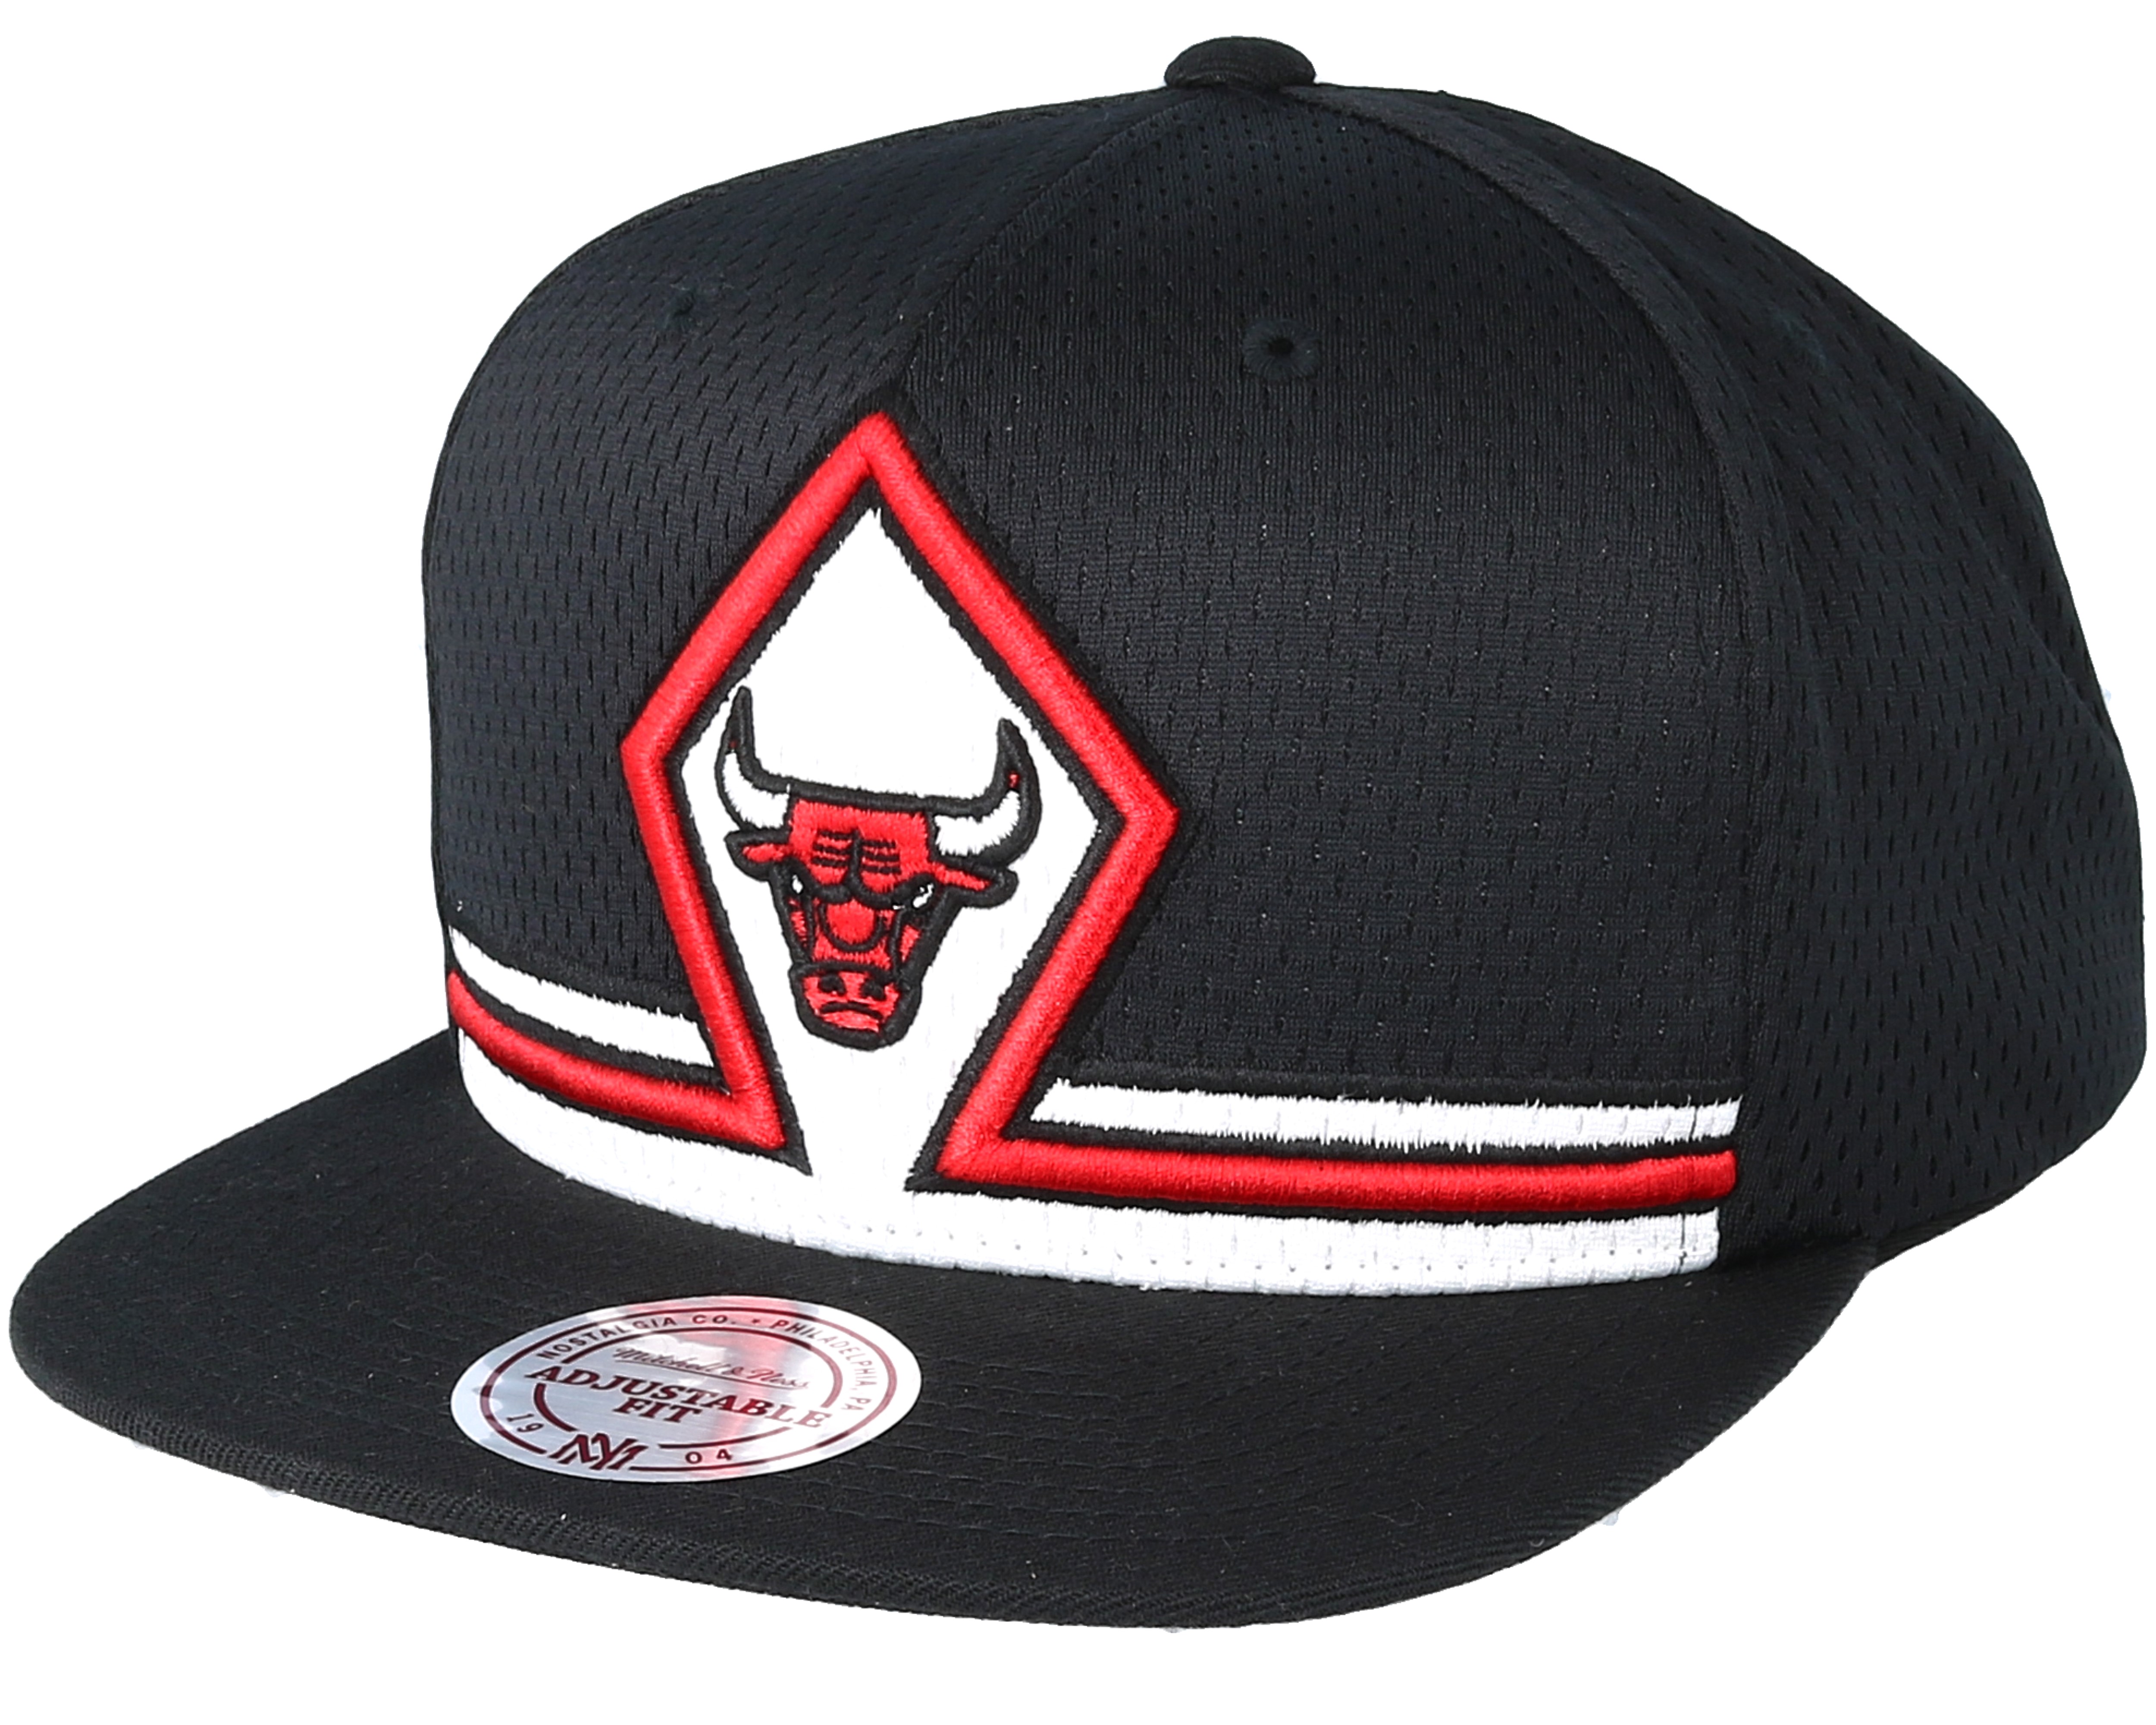 Chicago Bulls Jersey Black Snapback - Mitchell & Ness caps | Hatstore.co.uk5000 x 4000